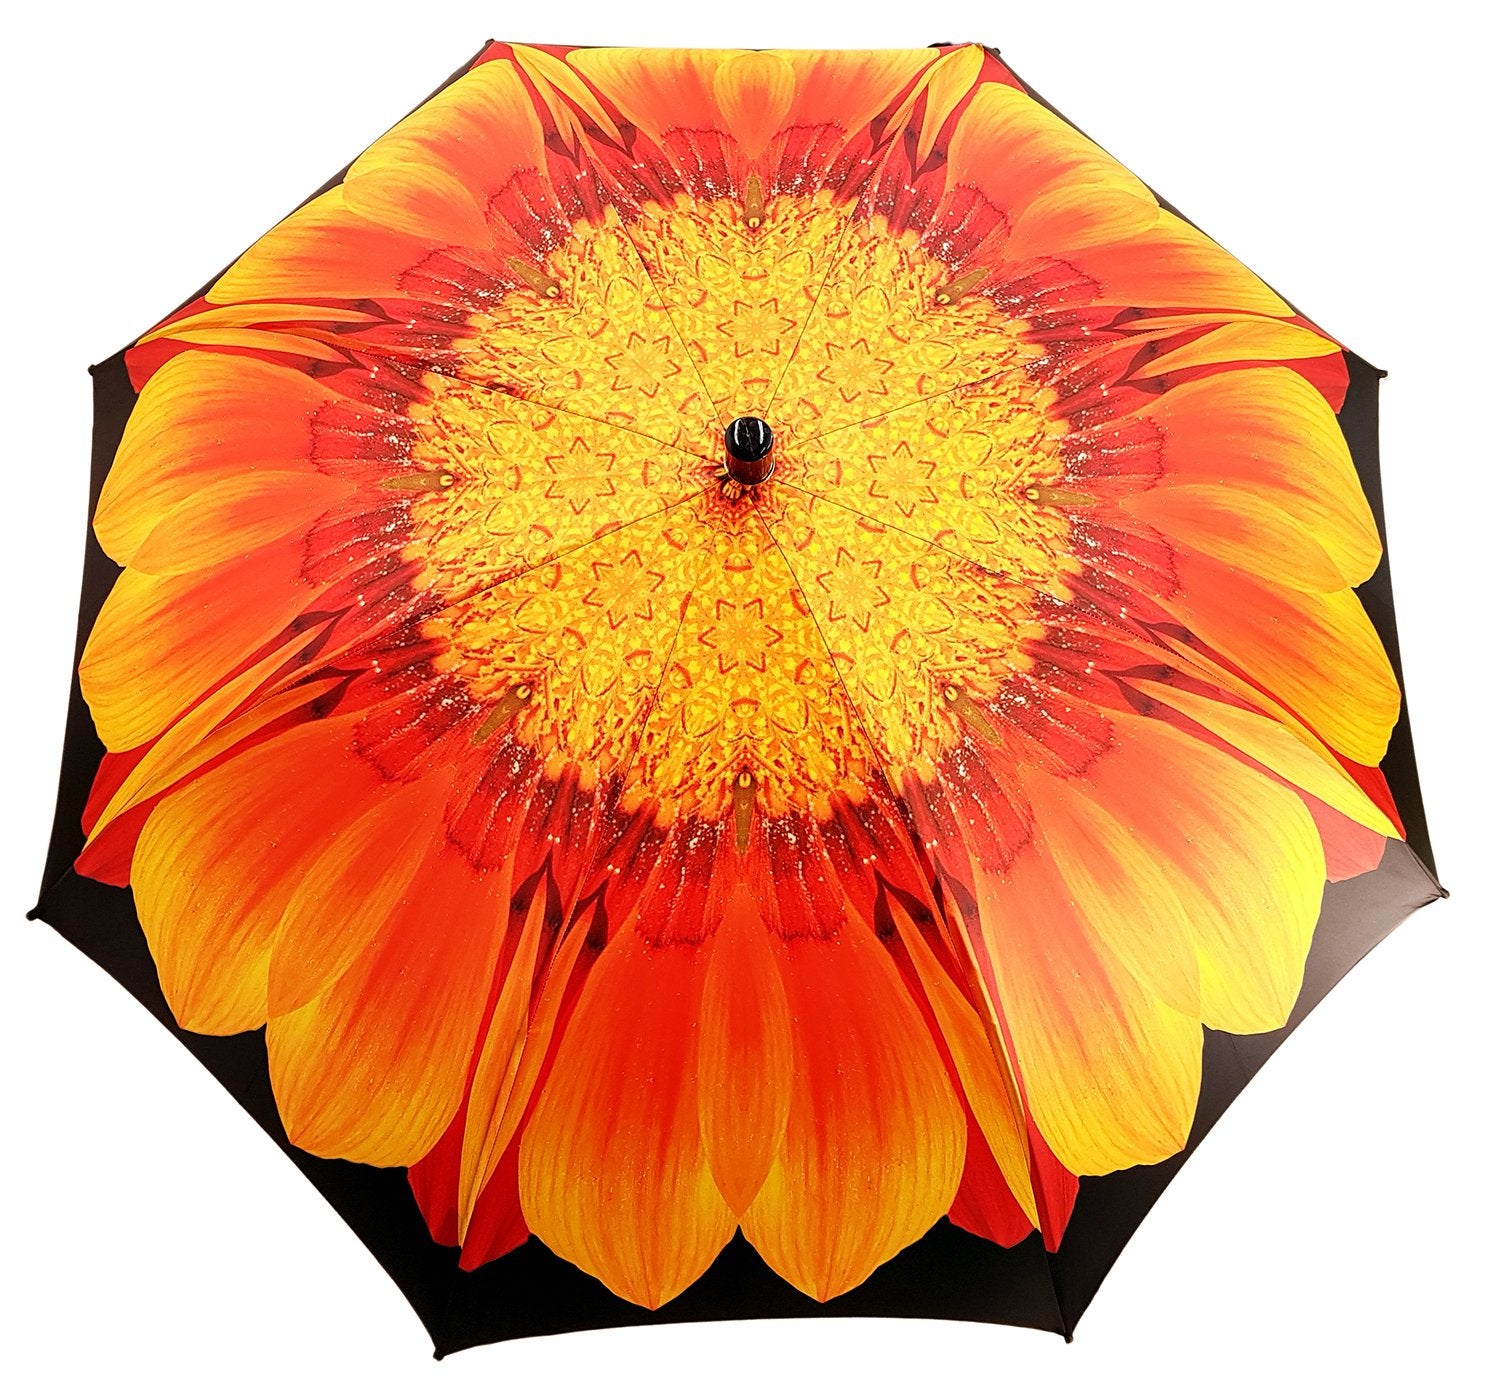 Remarkable Distinctive Flower Design - il-marchesato